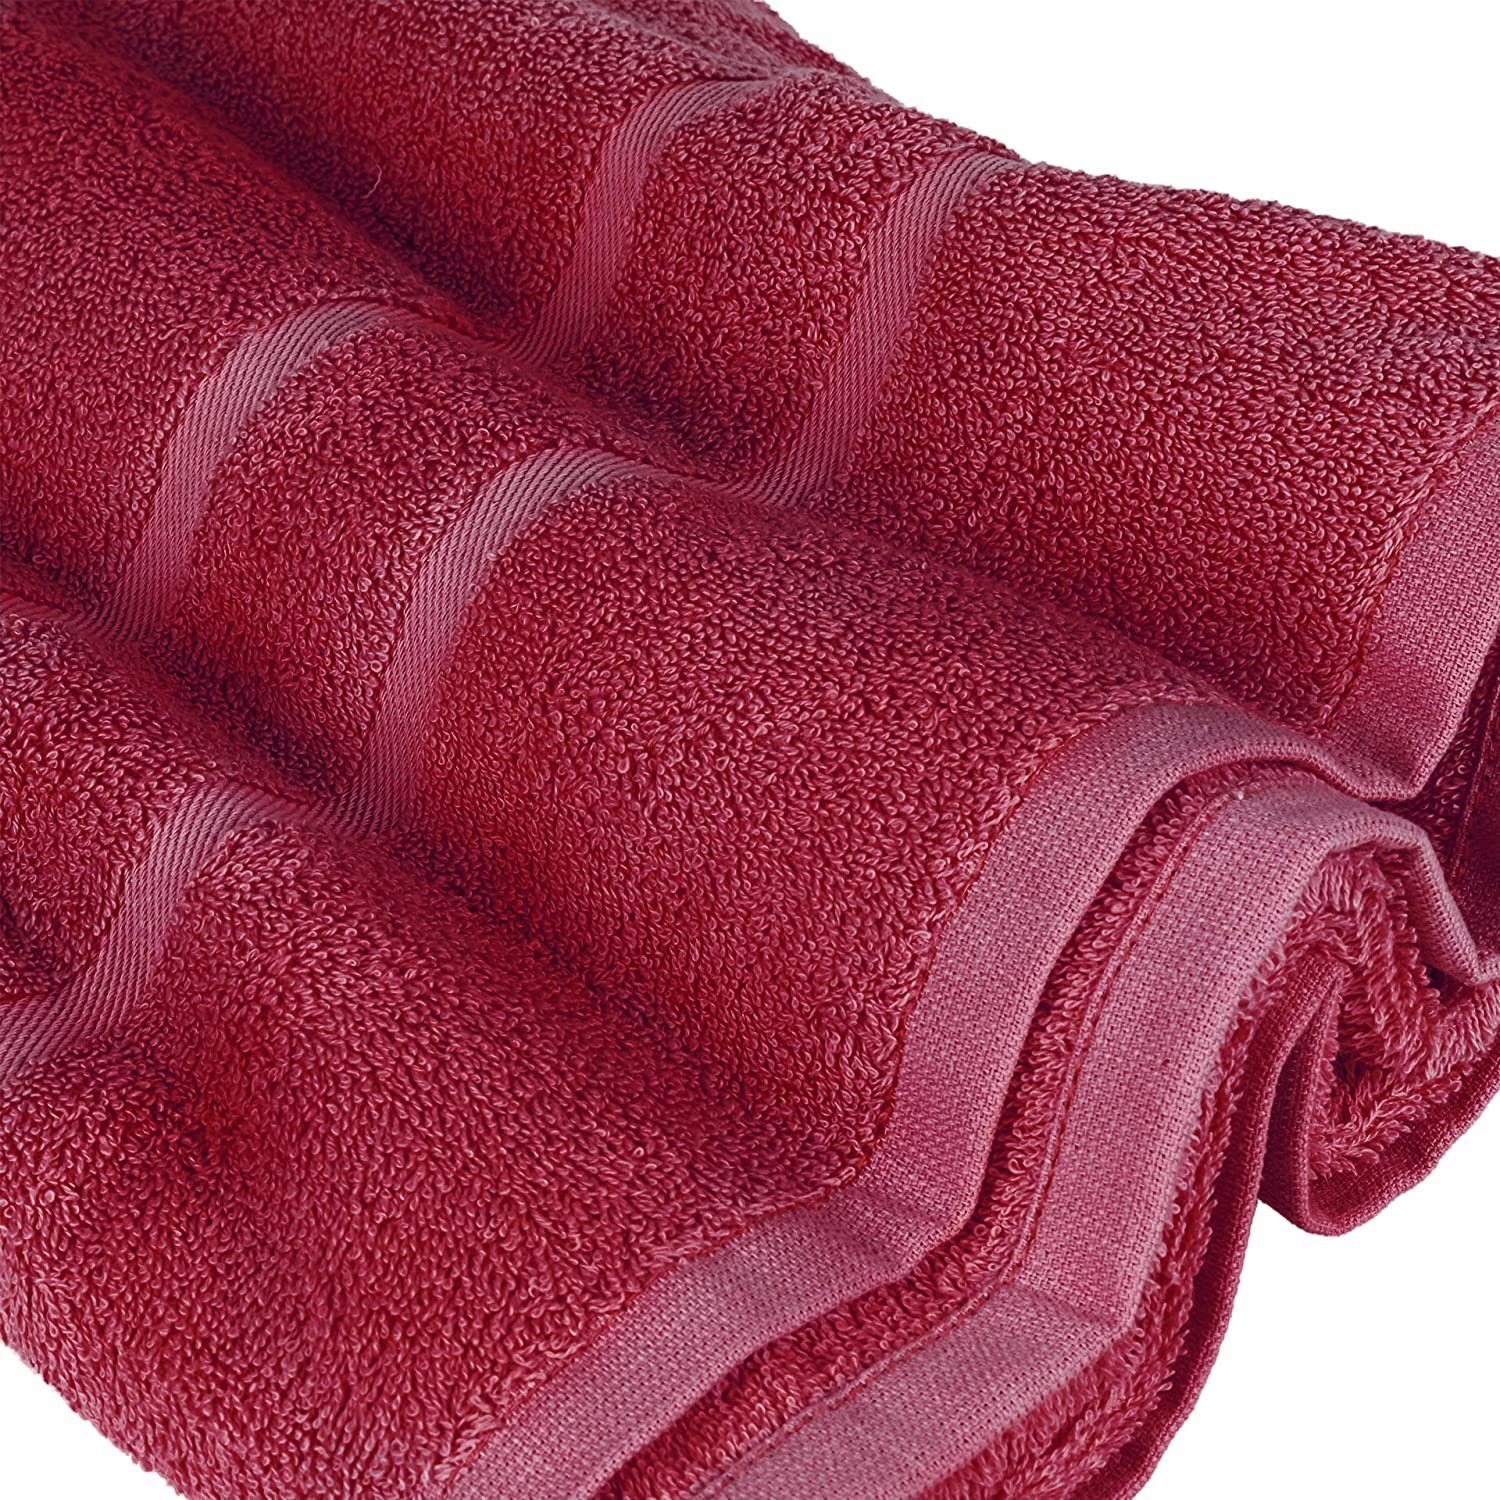 Handtuch Frottee 100% verschiedenen Bordeaux 2x 10er GSM Teilig) StickandShine (10 Set in 500 Baumwolle Handtücher Gästehandtuch 500 Handtuch Duschtücher 100% Farben Pack, Baumwolle SET 4x als 4x GSM